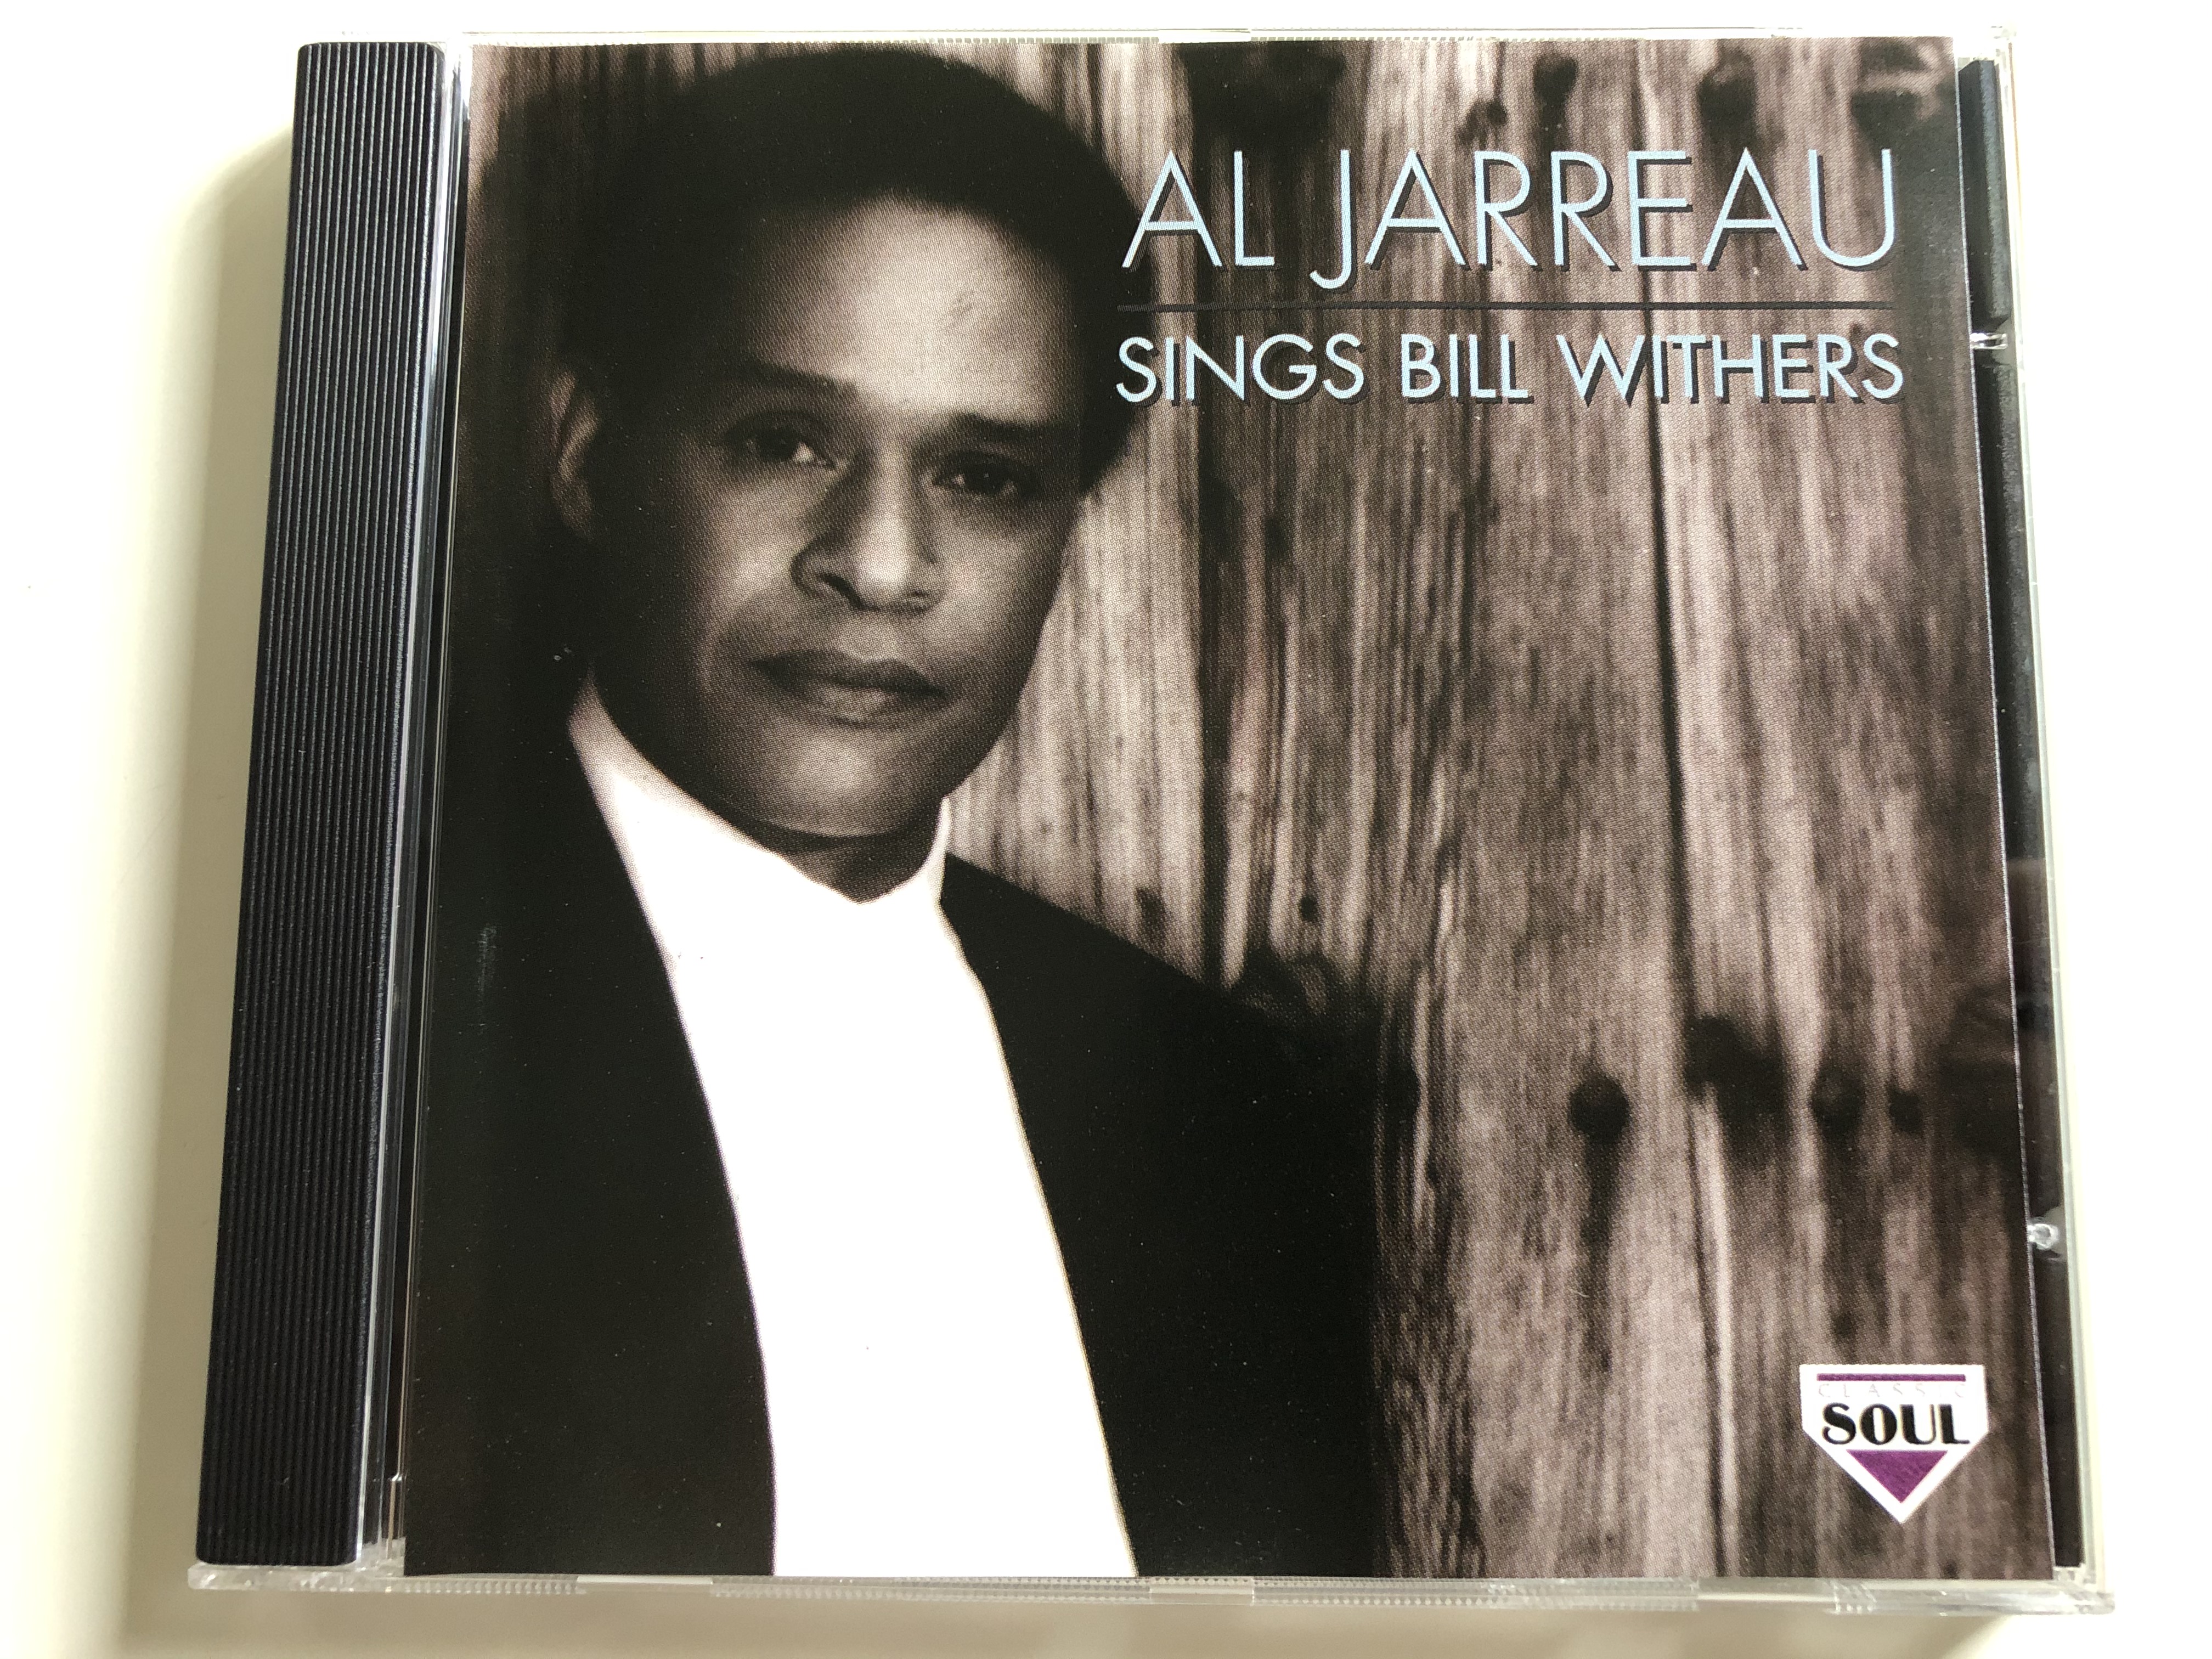 al-jarreau-sings-bill-withers-charly-holdings-ltd.-audio-cd-1994-cdcd-1196-1-.jpg